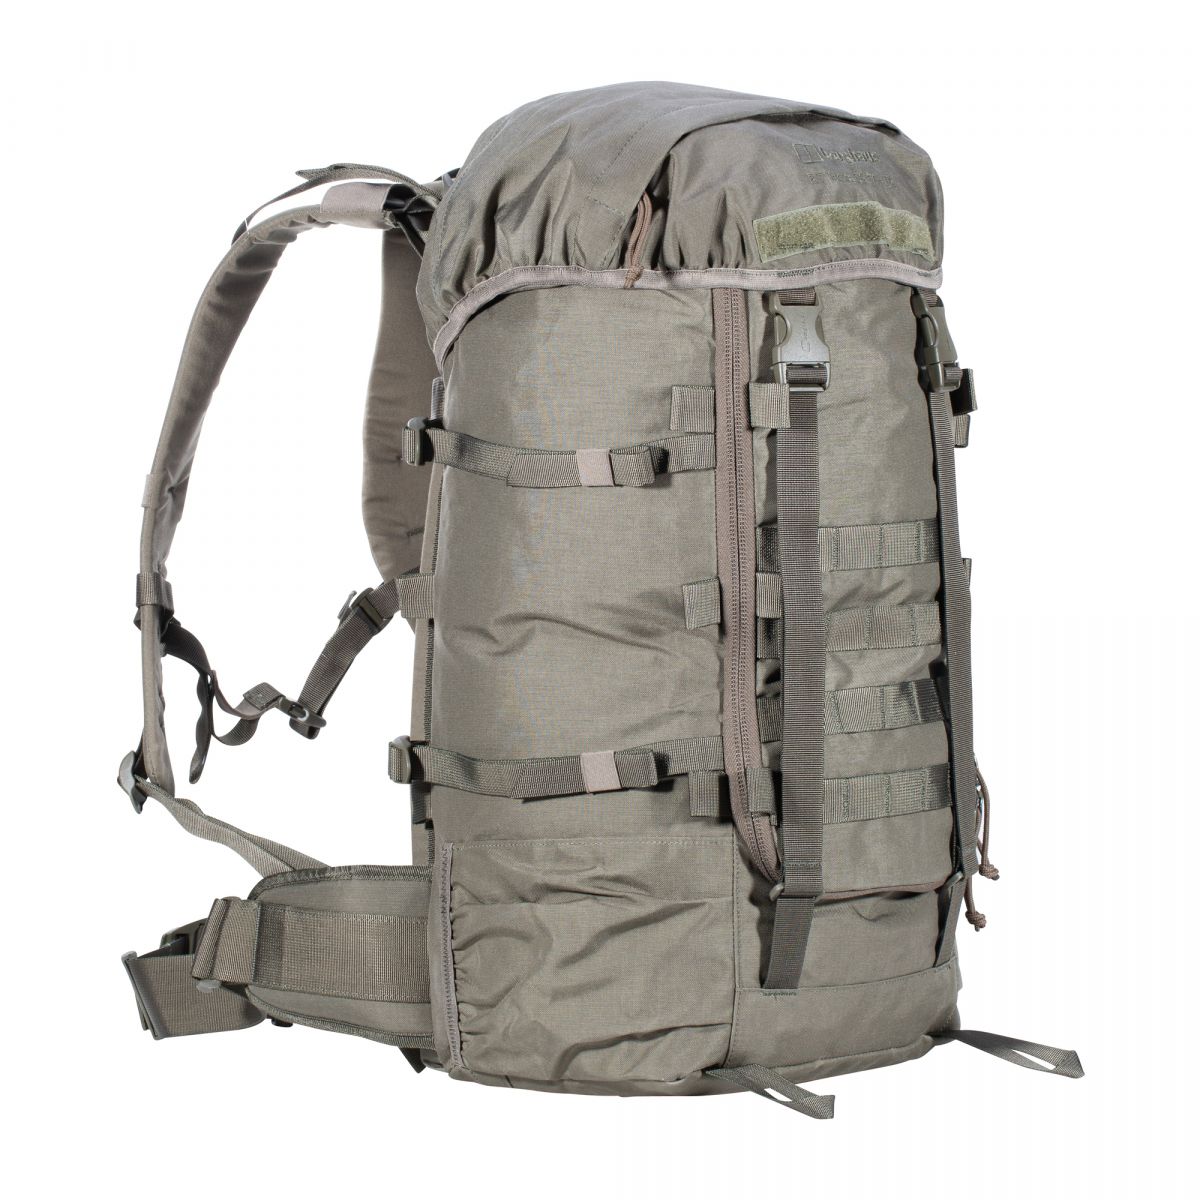 Purchase the Berghaus Backpack FLT Heros 35 FA IR stone gray oli